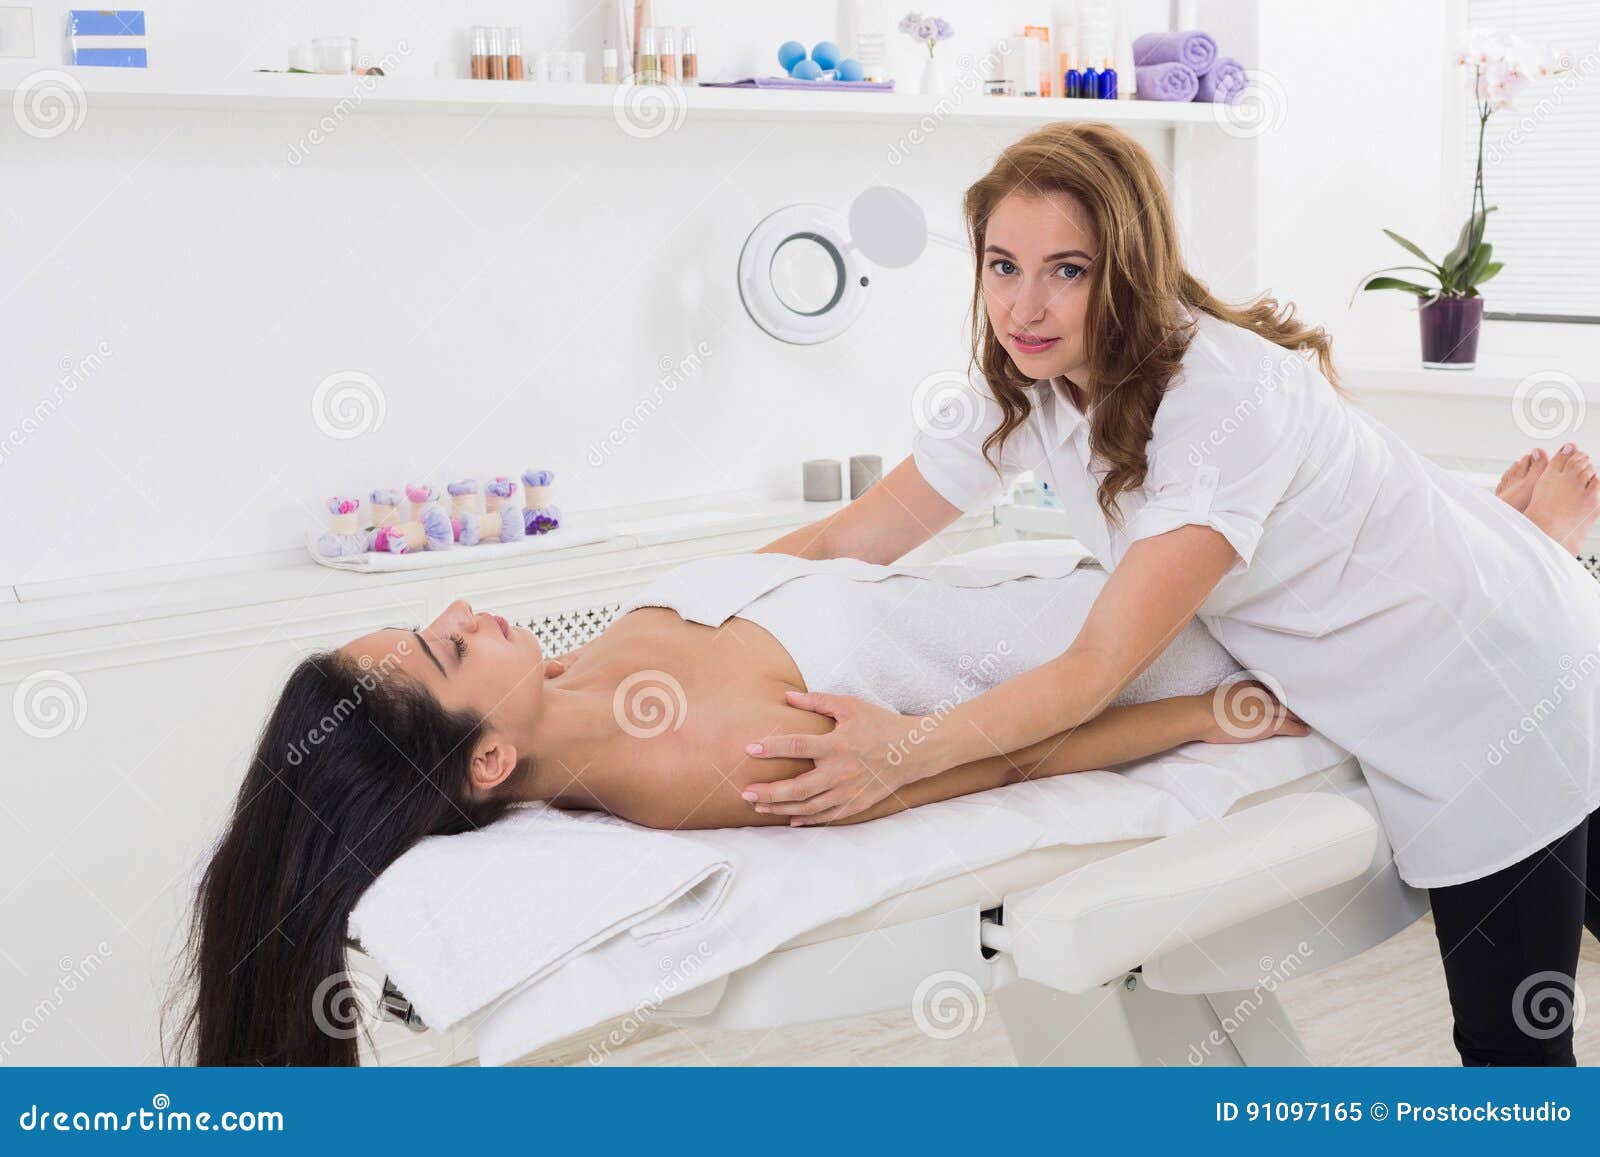 Woman Beautician Doctor Make Head Massage In Spa Wellness Center Stock